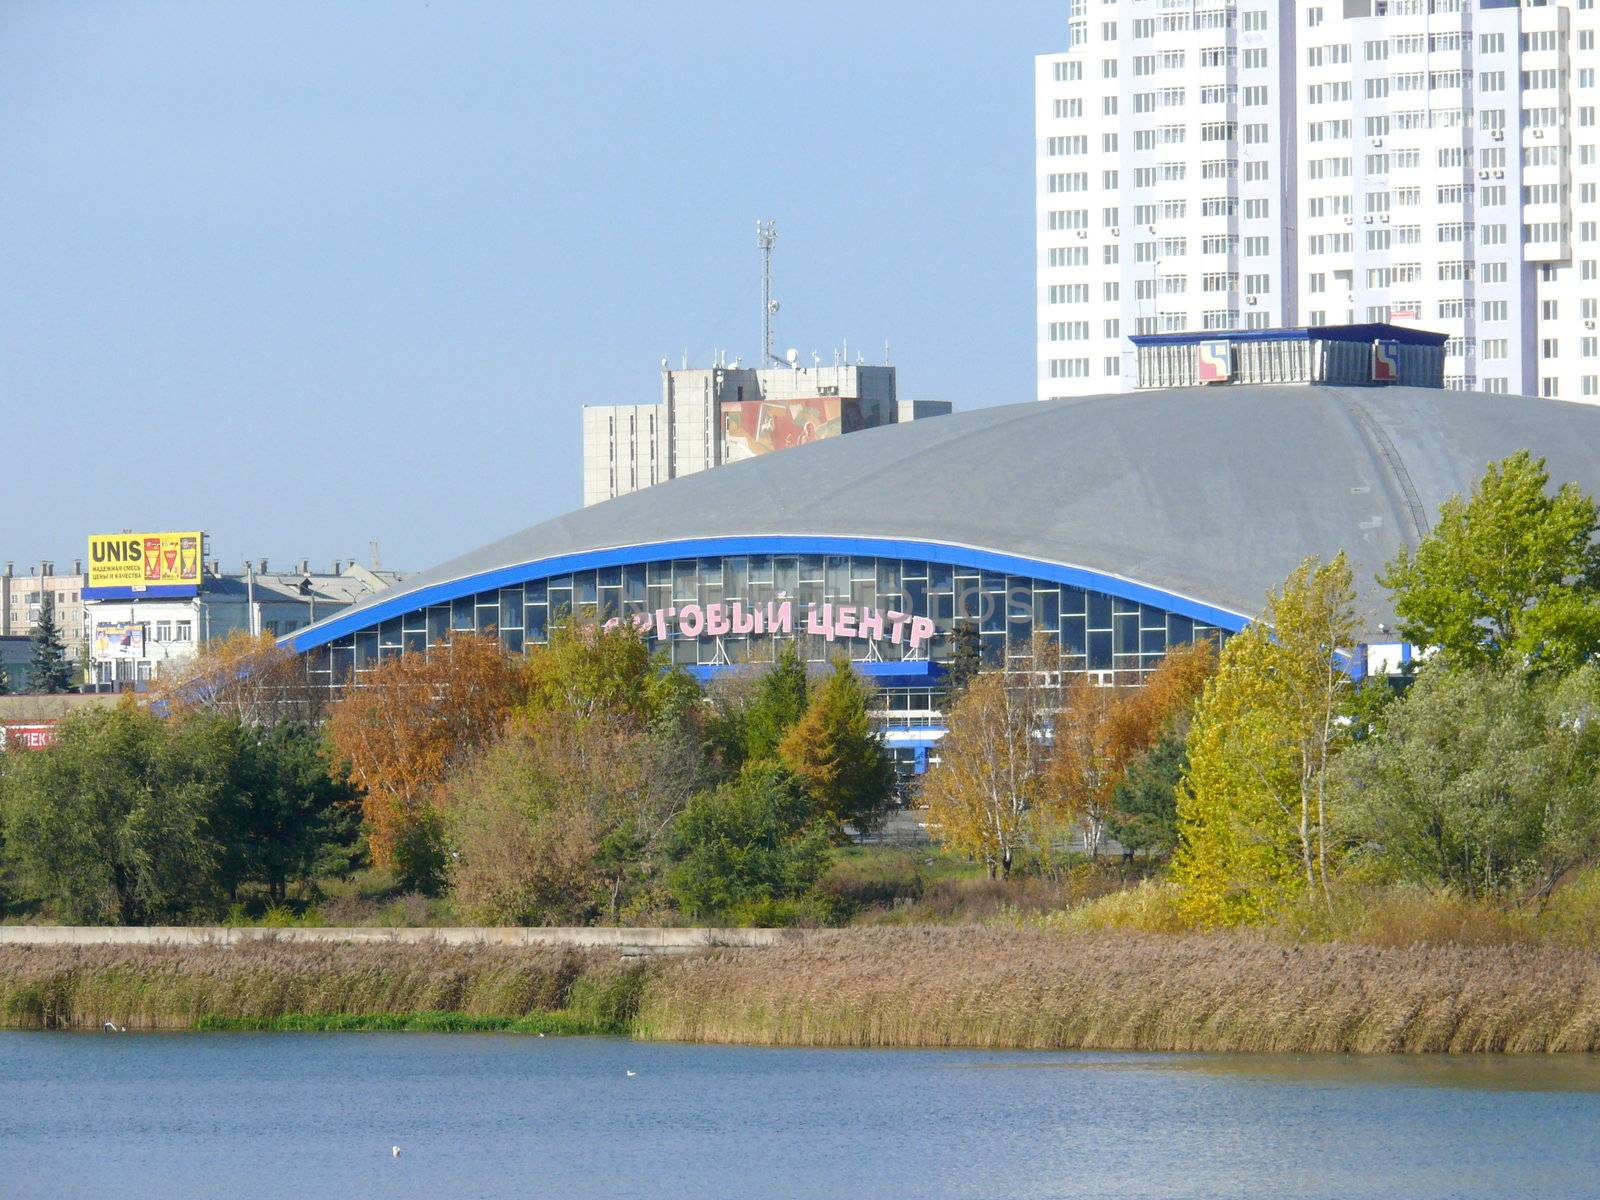 City trade center in Chelyabinsk